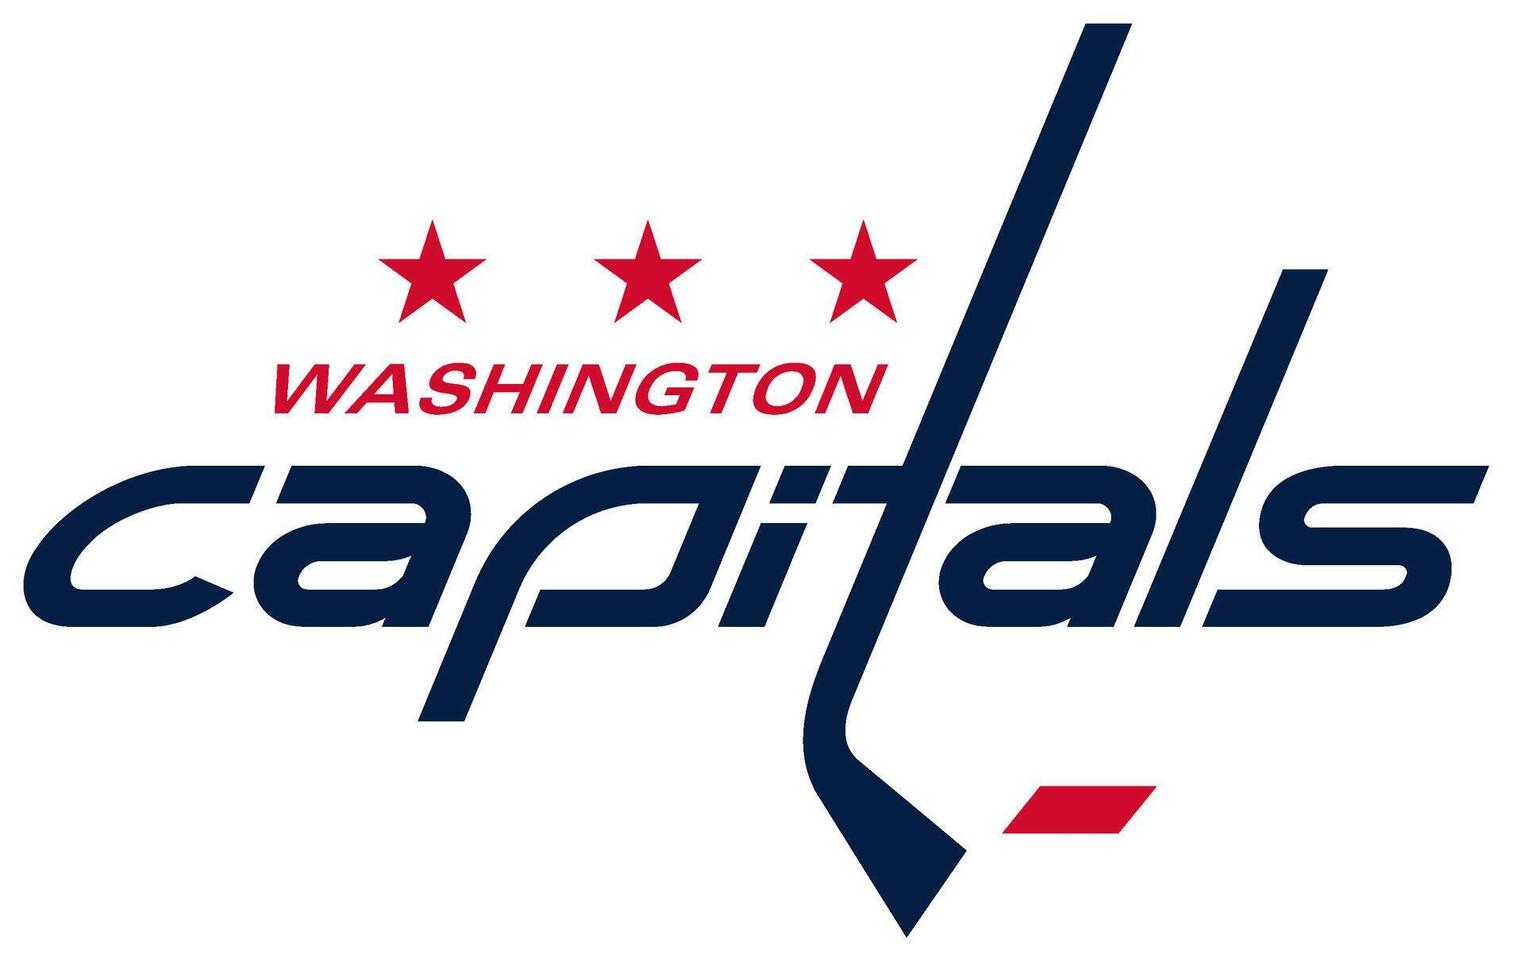 Logo of the Washington Capitals National Hockey League team vector